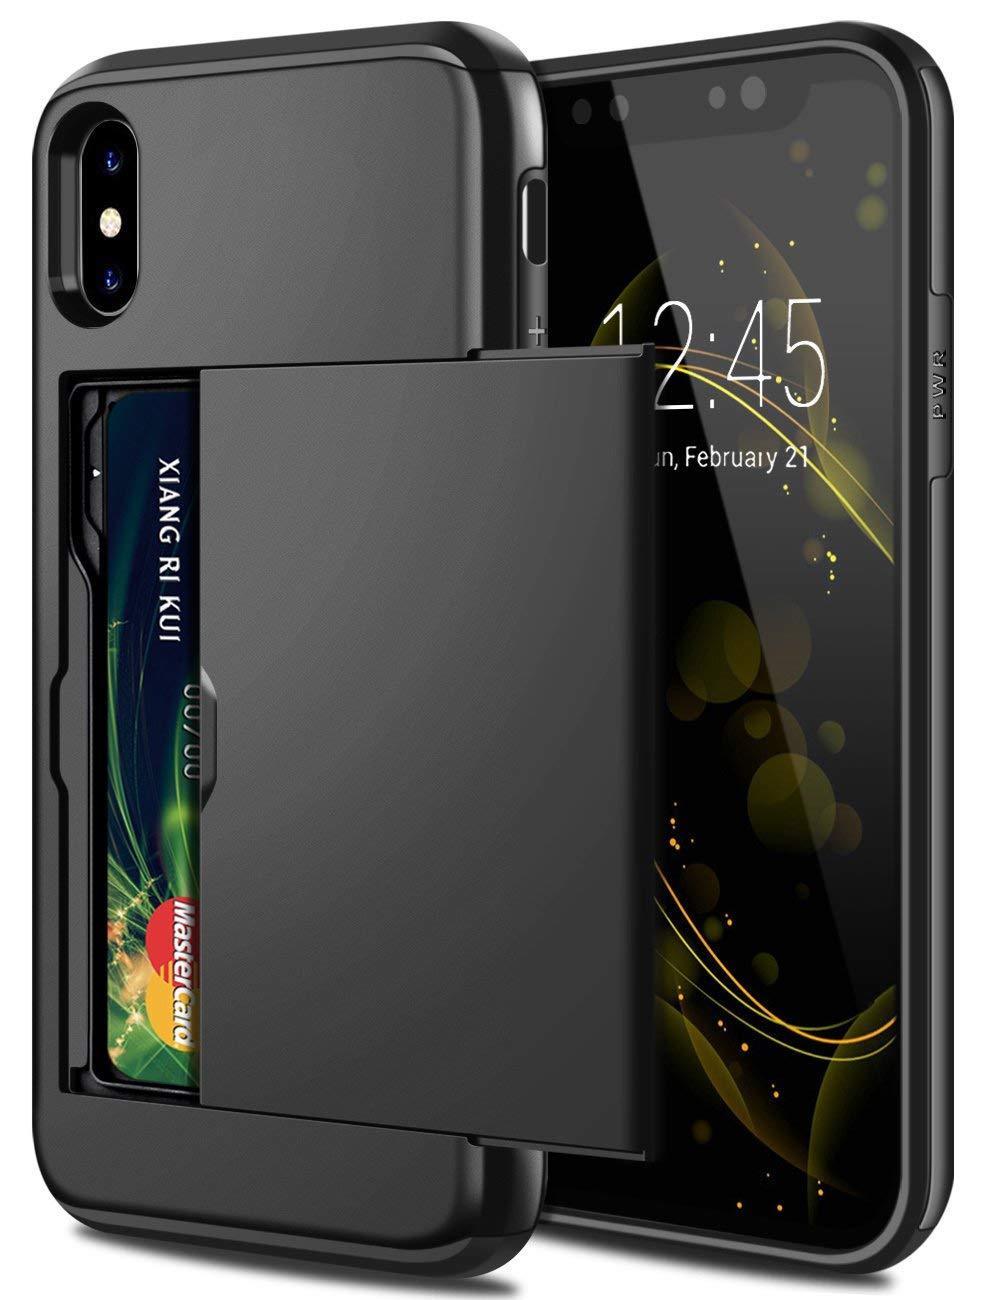 iPhone 7 Plus  Case Slide Armor Wallet Card Slots Holder Cover for Apple-Black